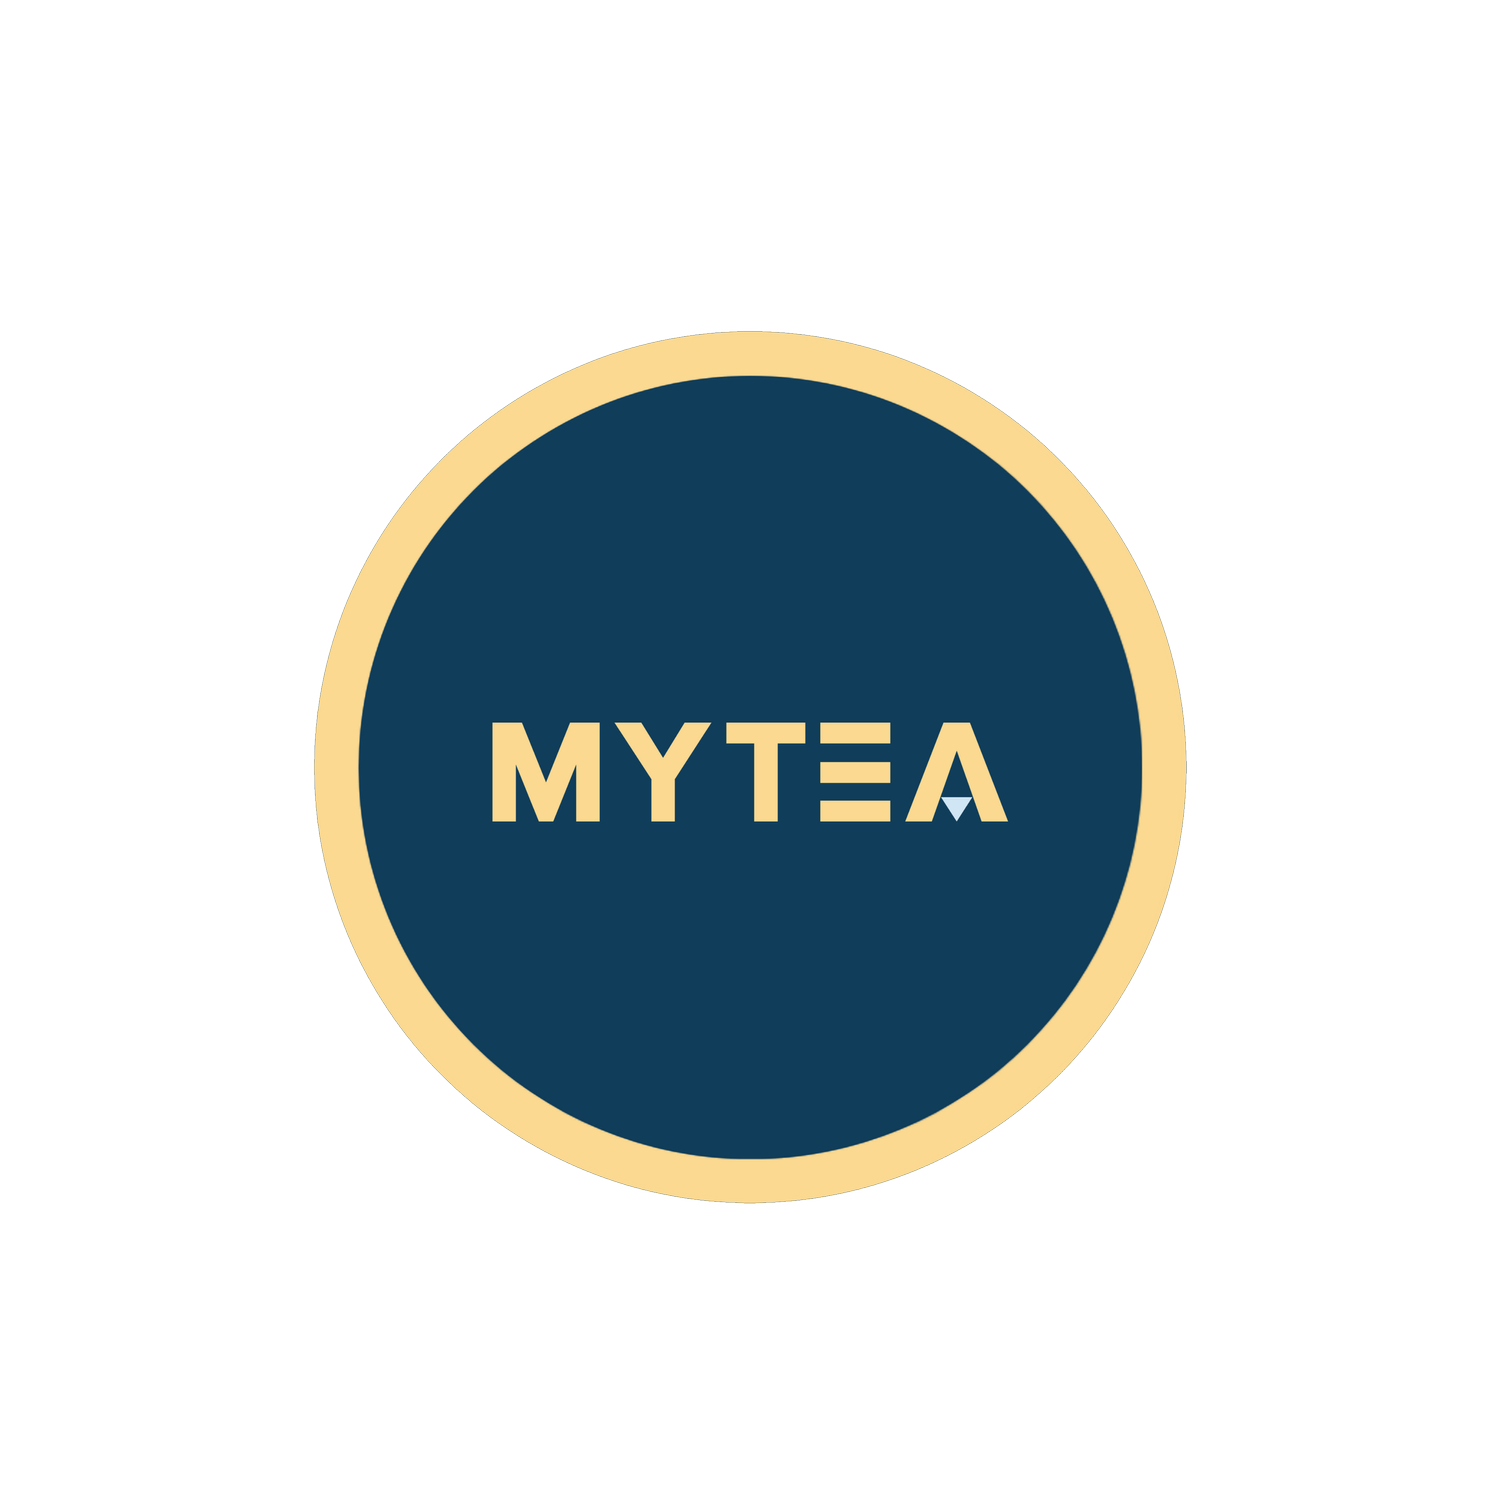 MYTEA